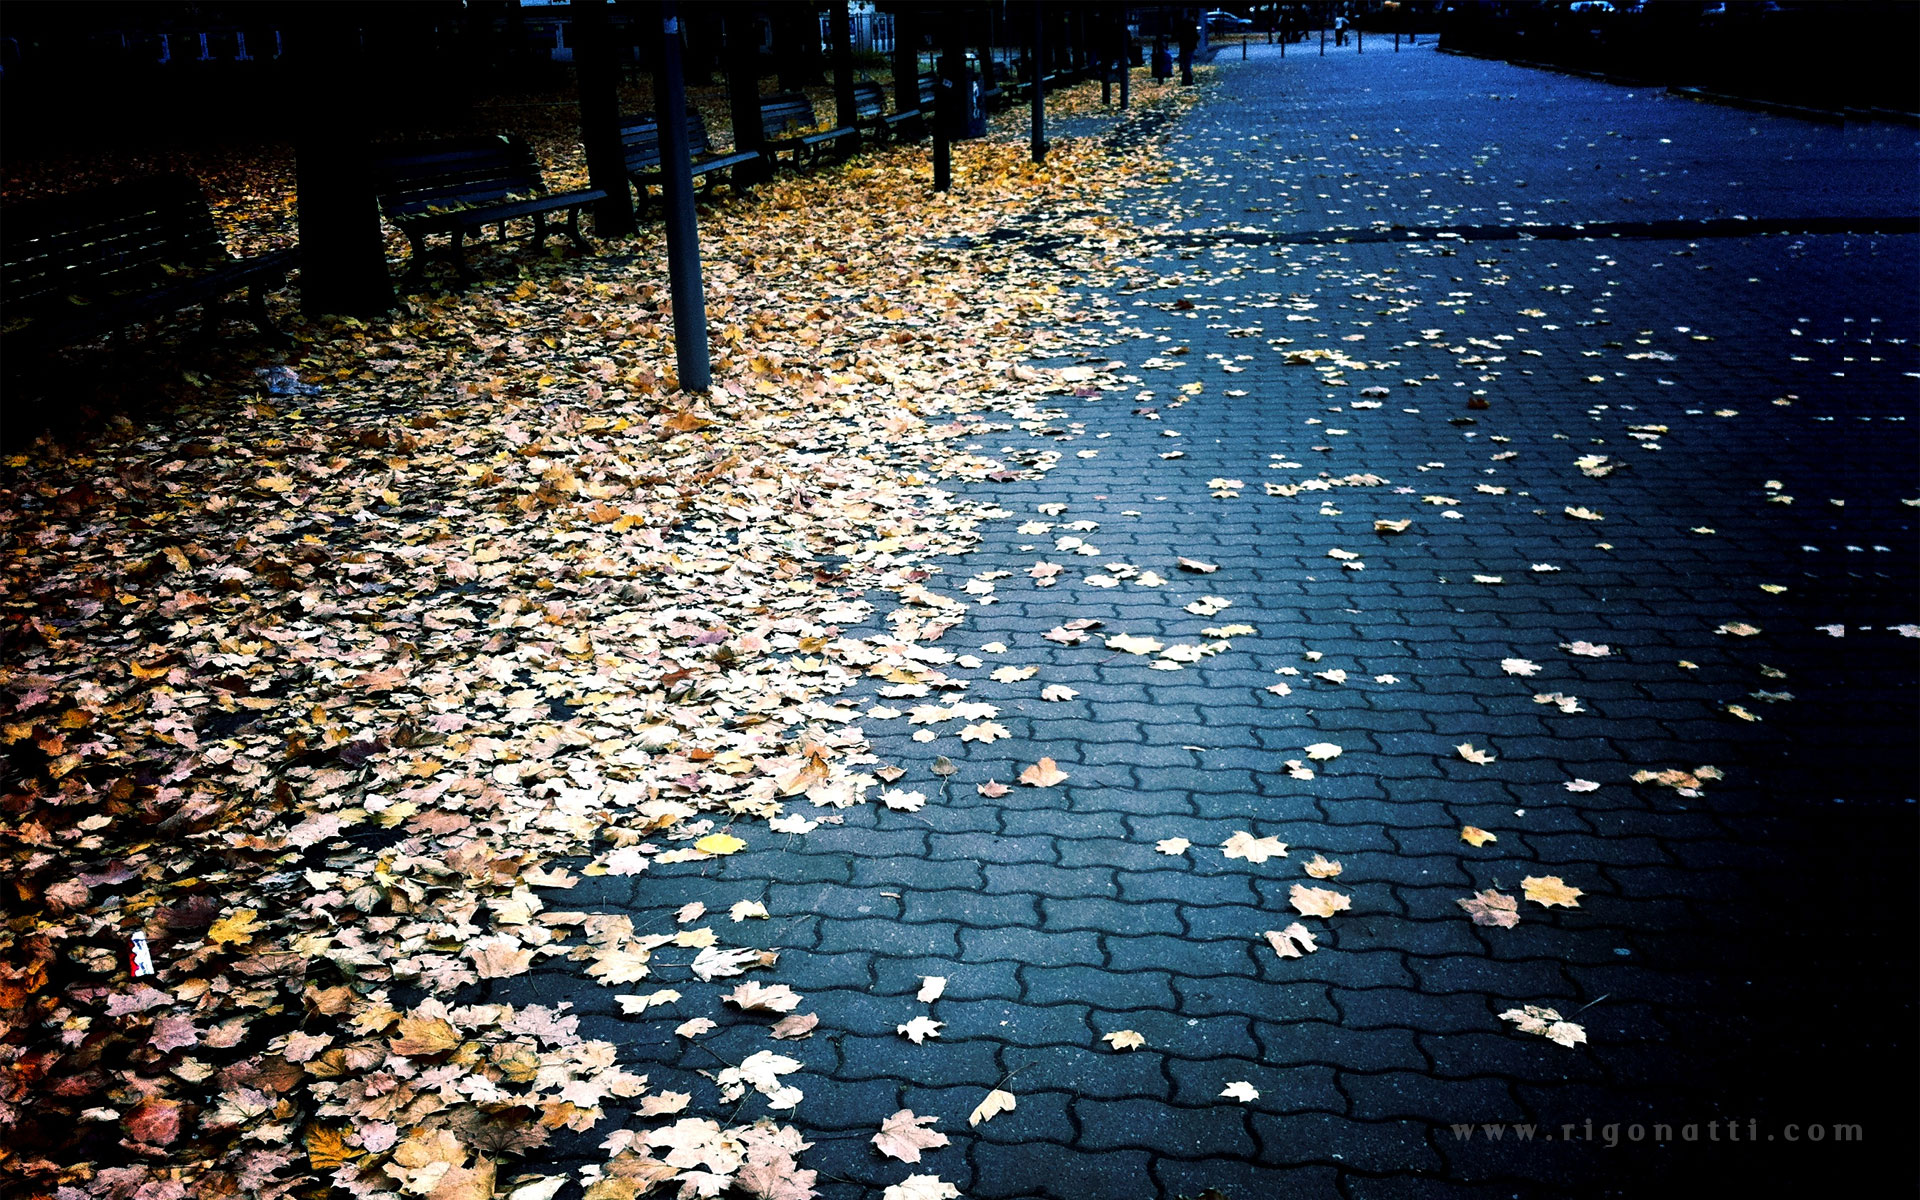 autumn, leaves, fallen leaves - desktop wallpaper